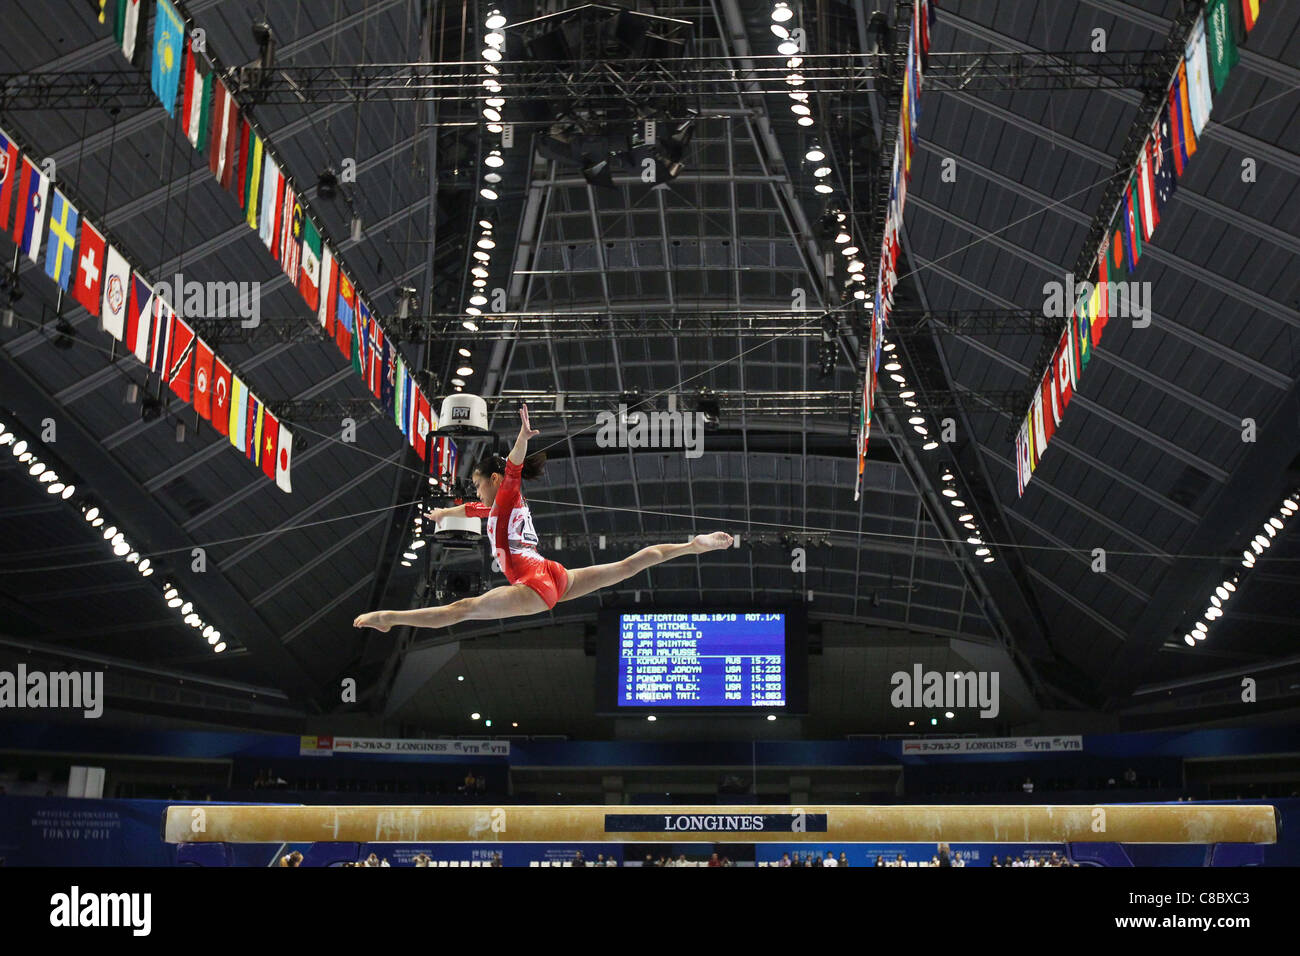 Yuko Shintake (JPN) performs during the FIG World Artistic Gymnastics Championships Tokyo 2011. Stock Photo